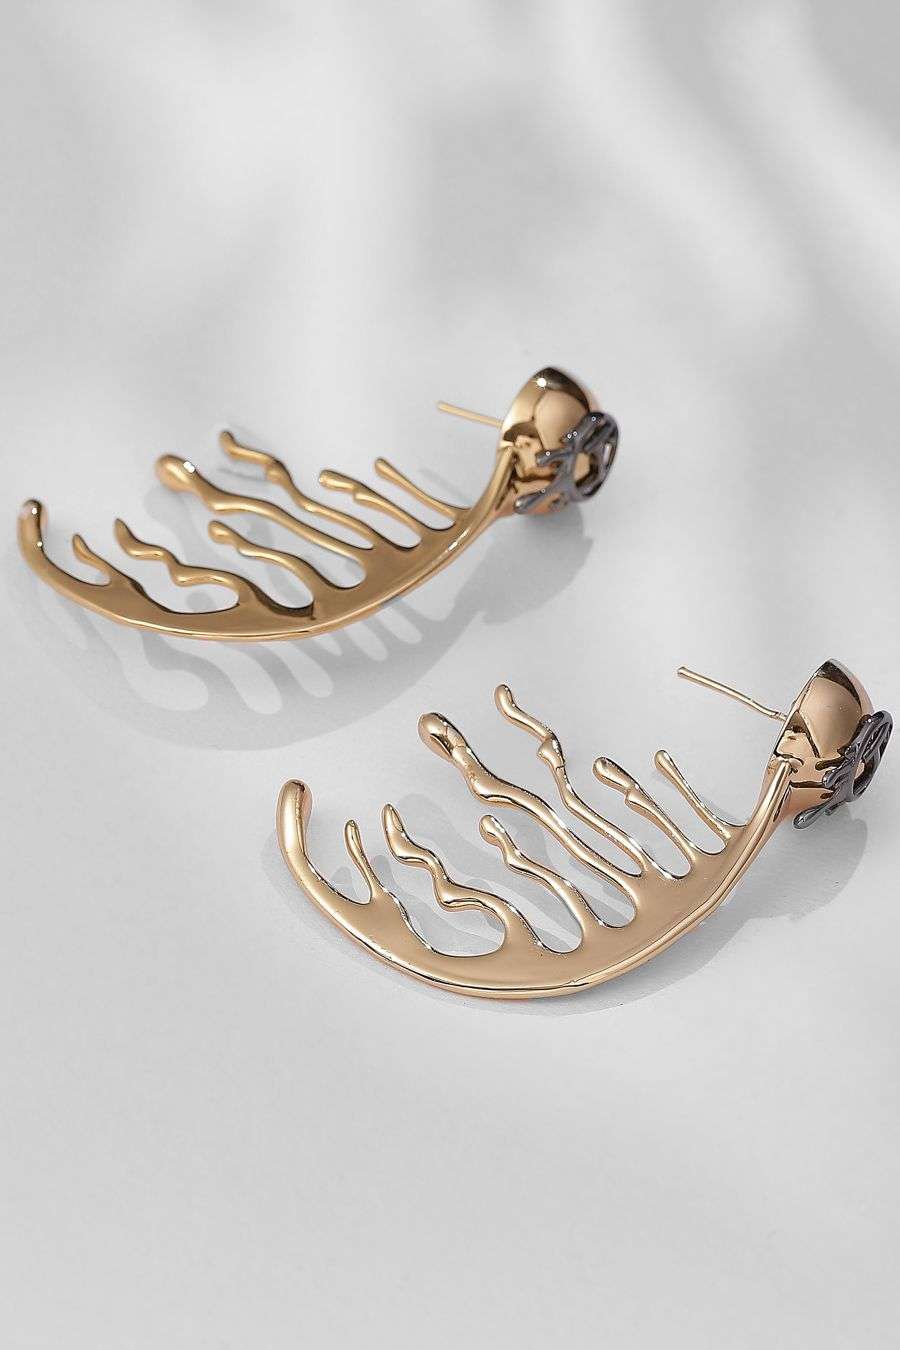 Details more than 126 gold half hoop earrings super hot